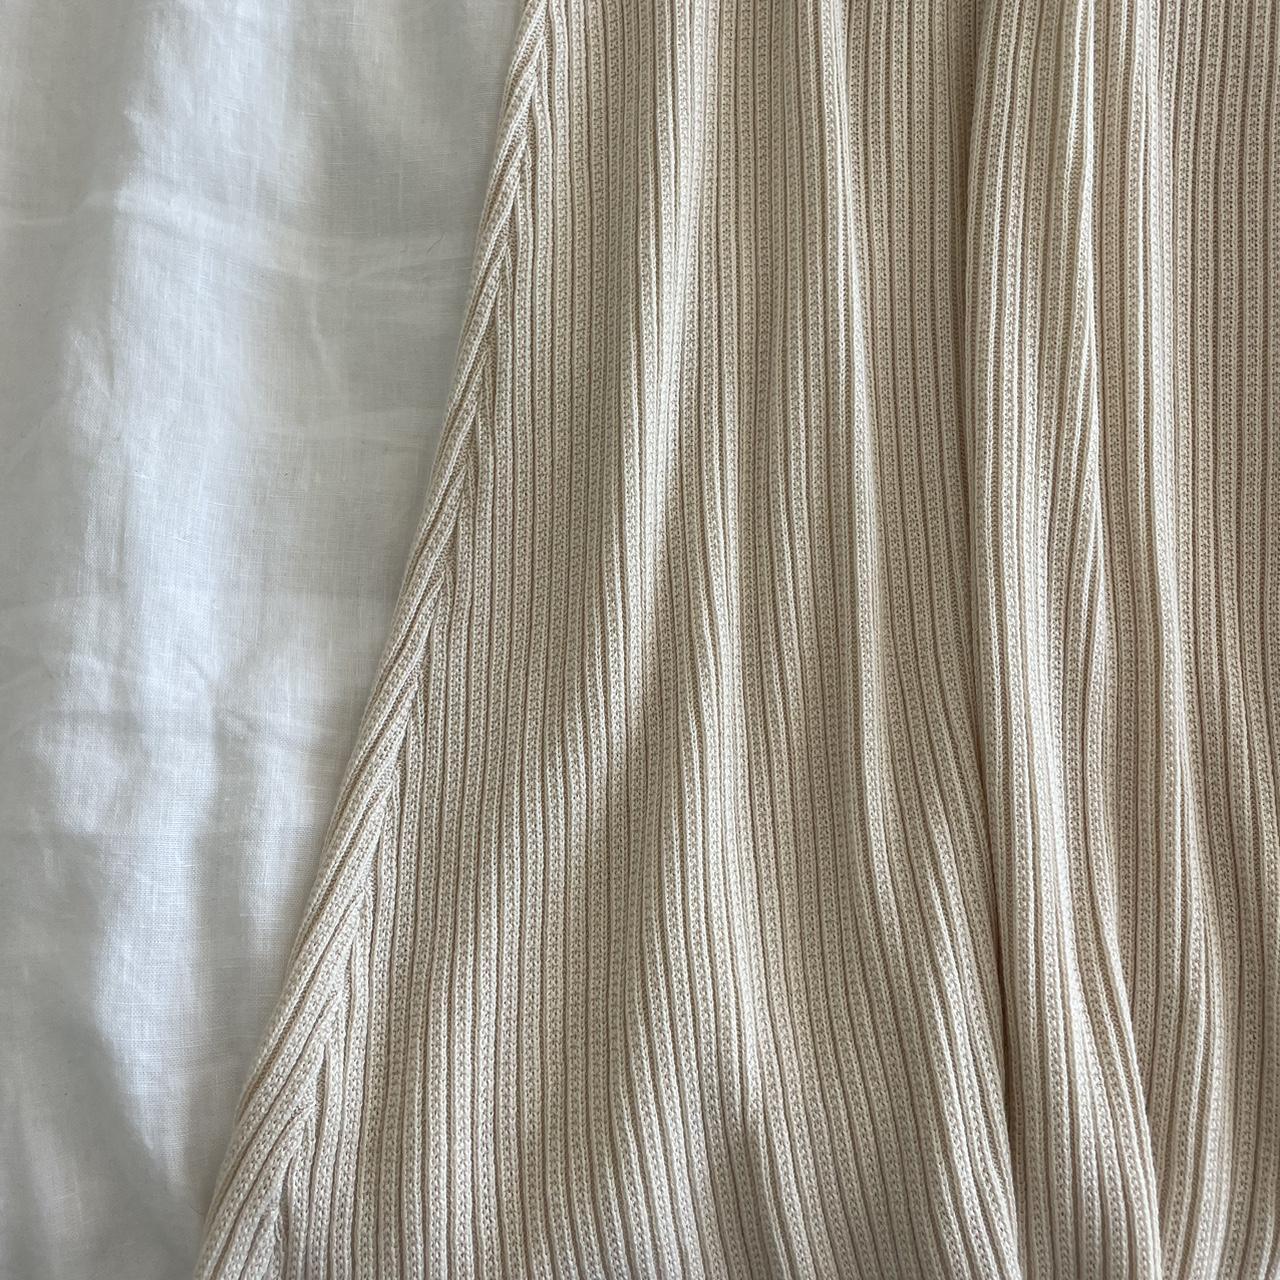 Sessun cream dress Knit like material - light to... - Depop